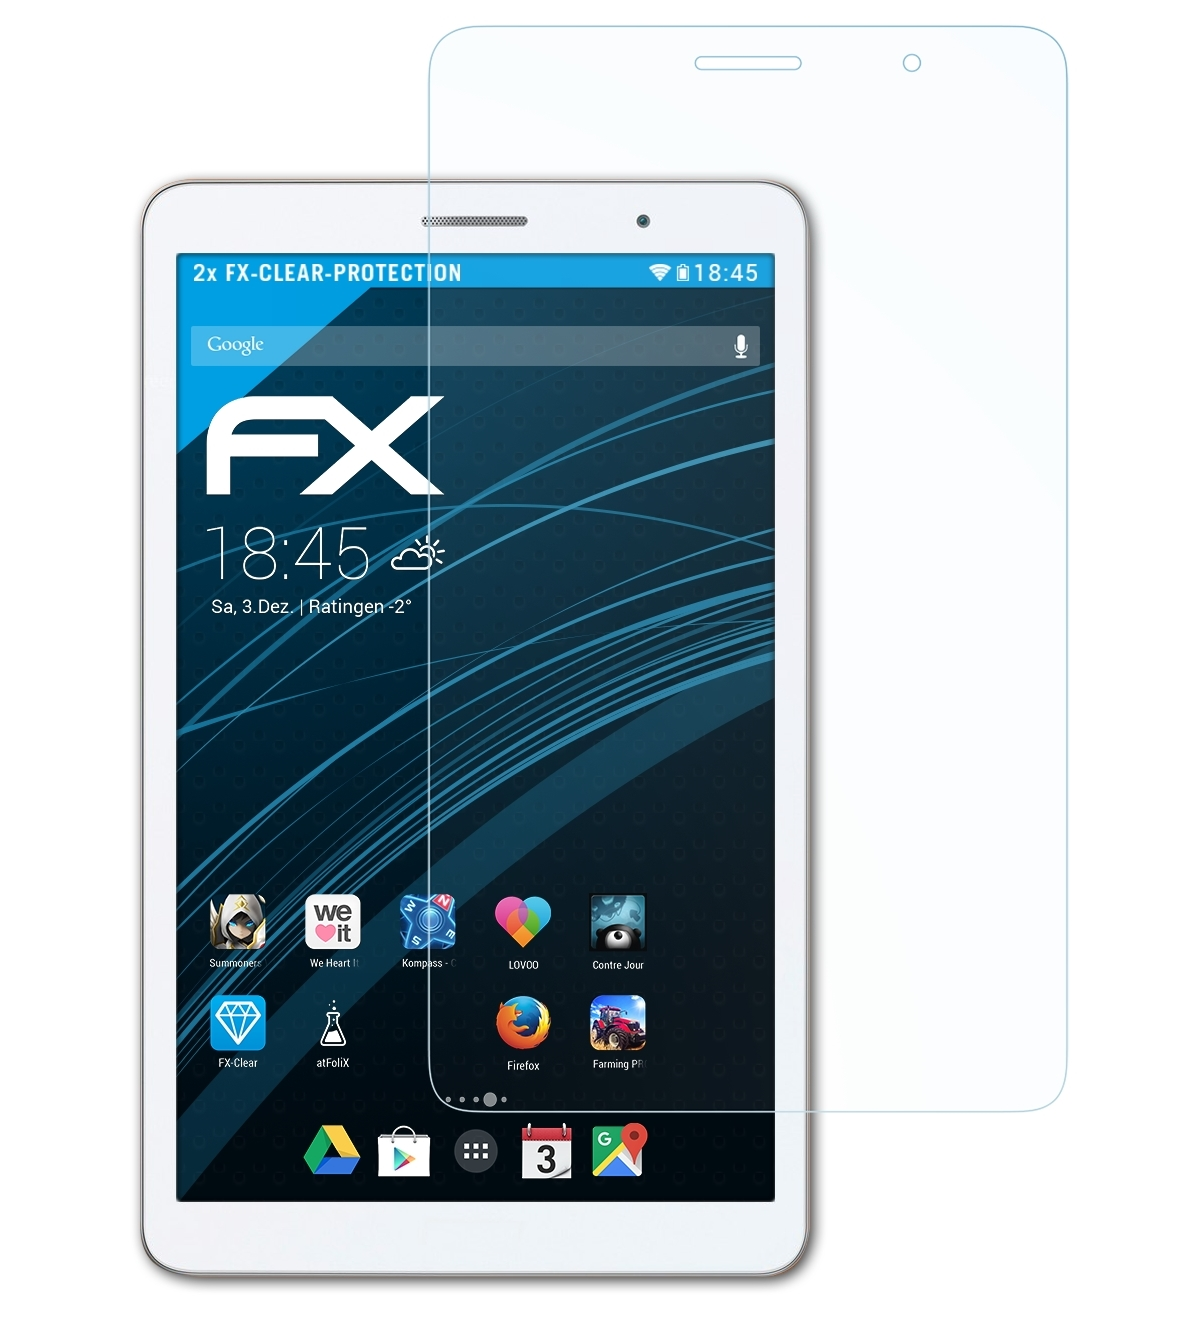 ATFOLIX 2x FX-Clear Displayschutz(für MediaPad T3 Huawei 8.0)